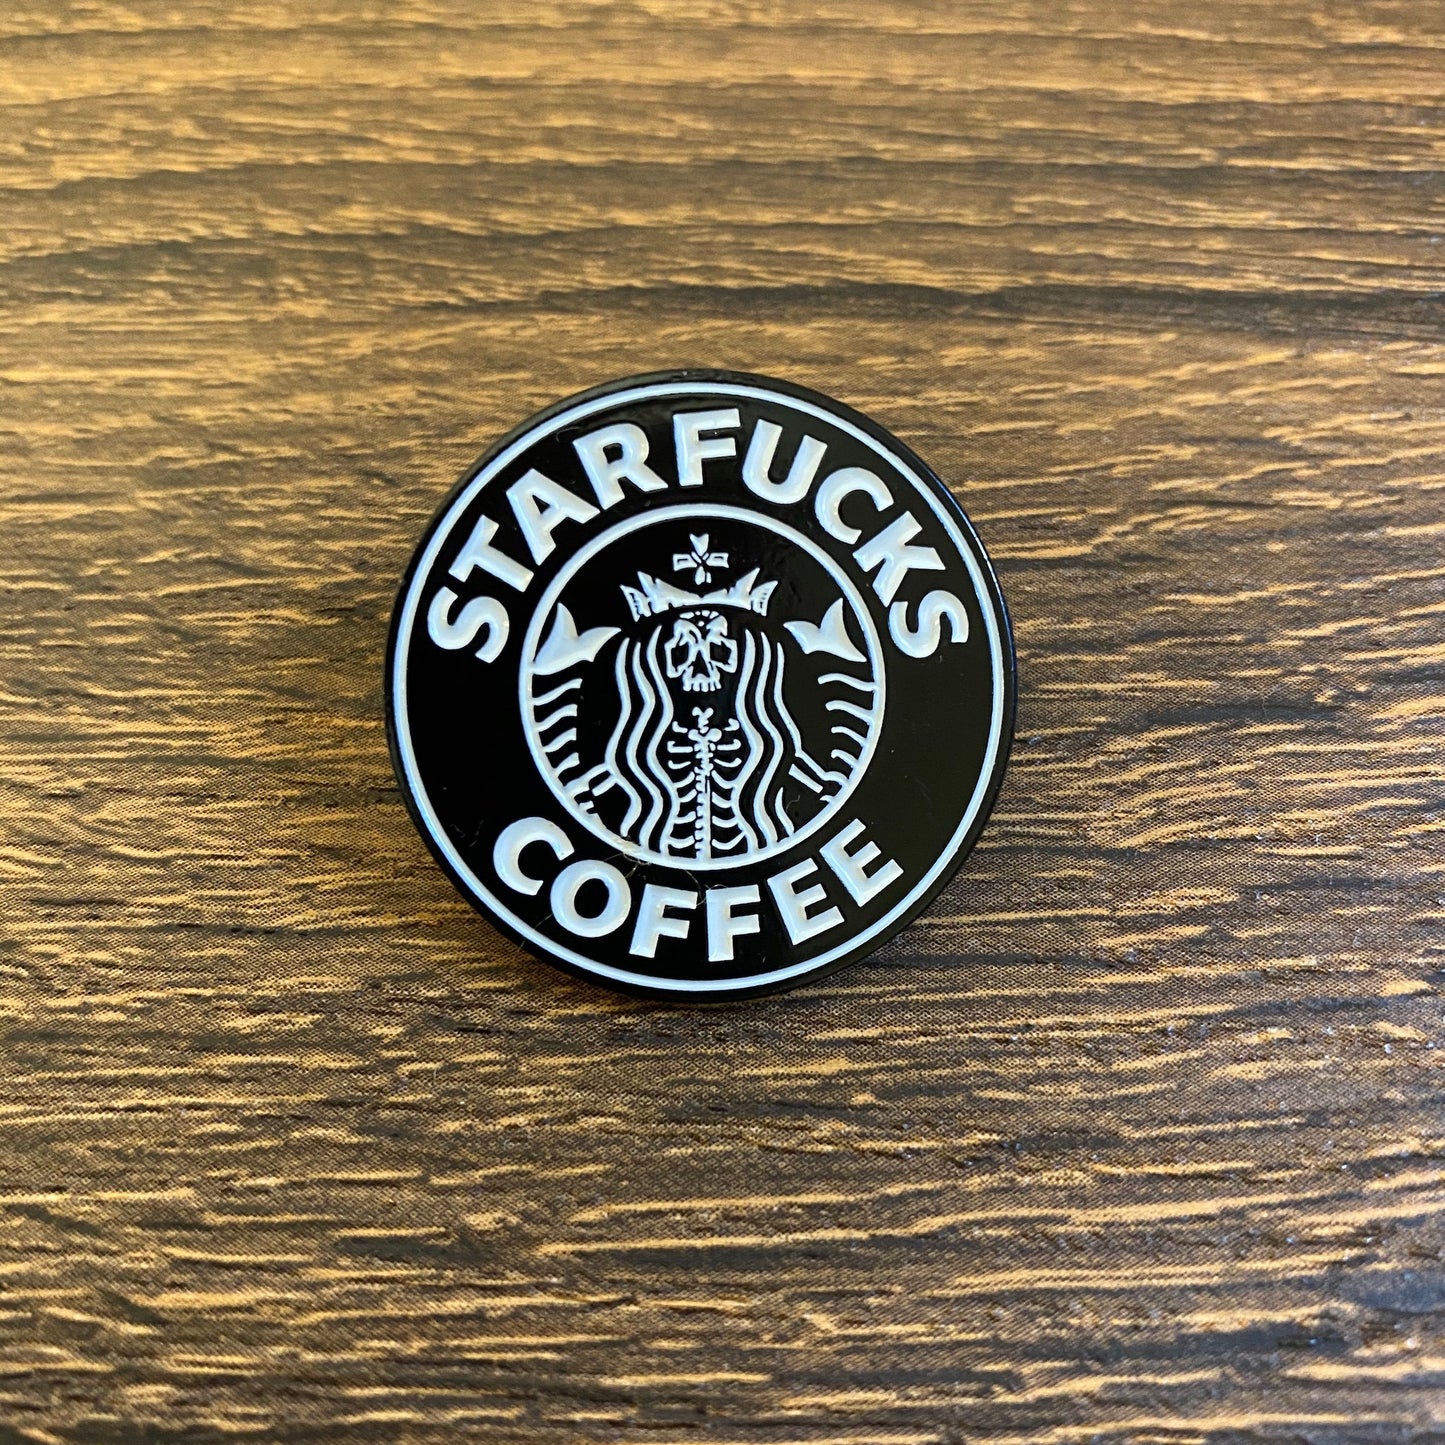 Starfucks Coffee - Absolutely No F***s Given Enamel Pin - thehappypin